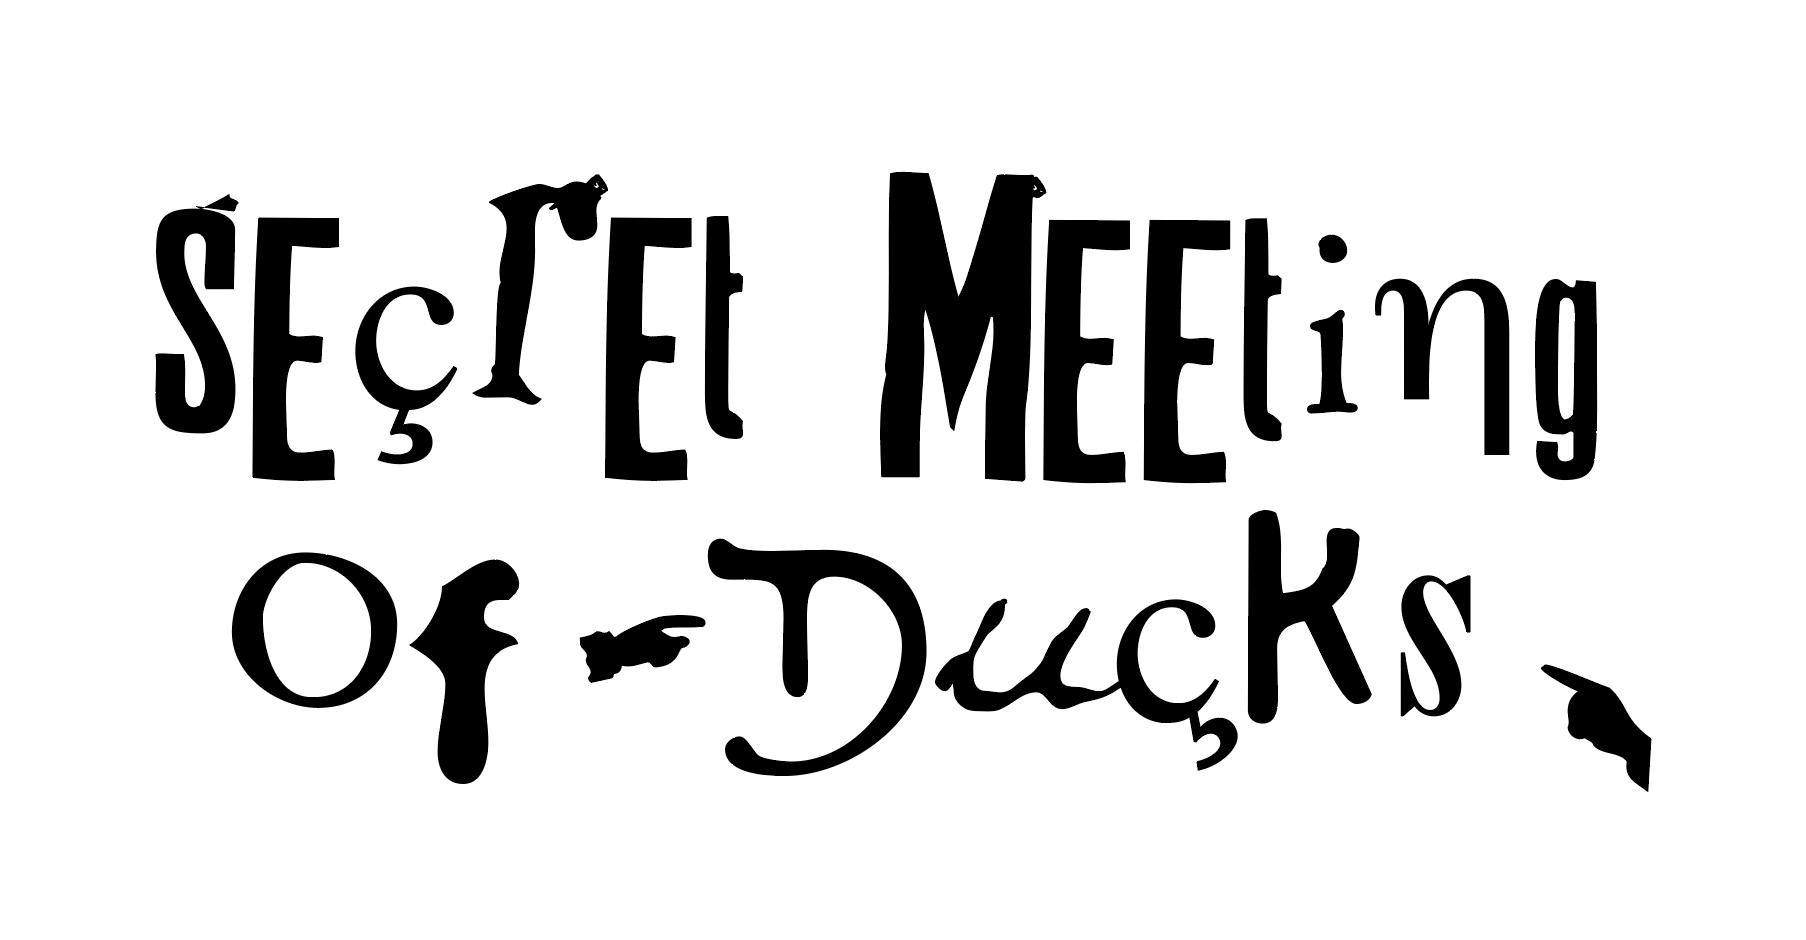 Secret Meeting of Ducks black text on white background